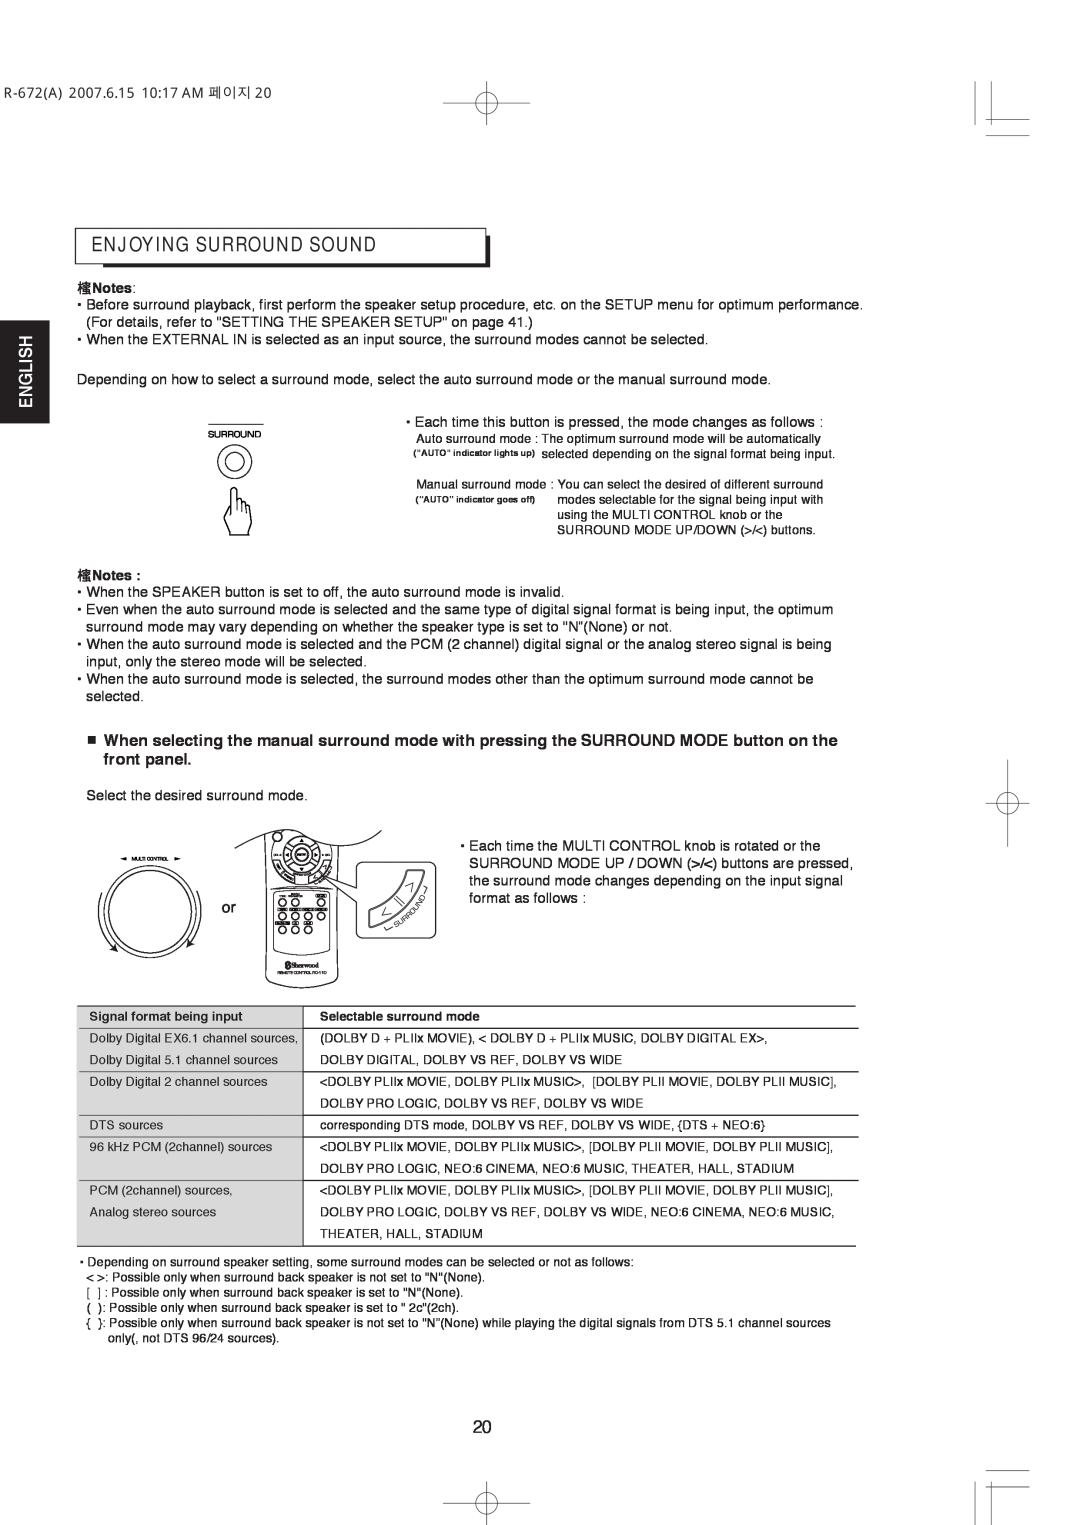 XM Satellite Radio manual Enjoying Surround Sound, English, R-672A2007.6.15 10 17 AM 페이지 